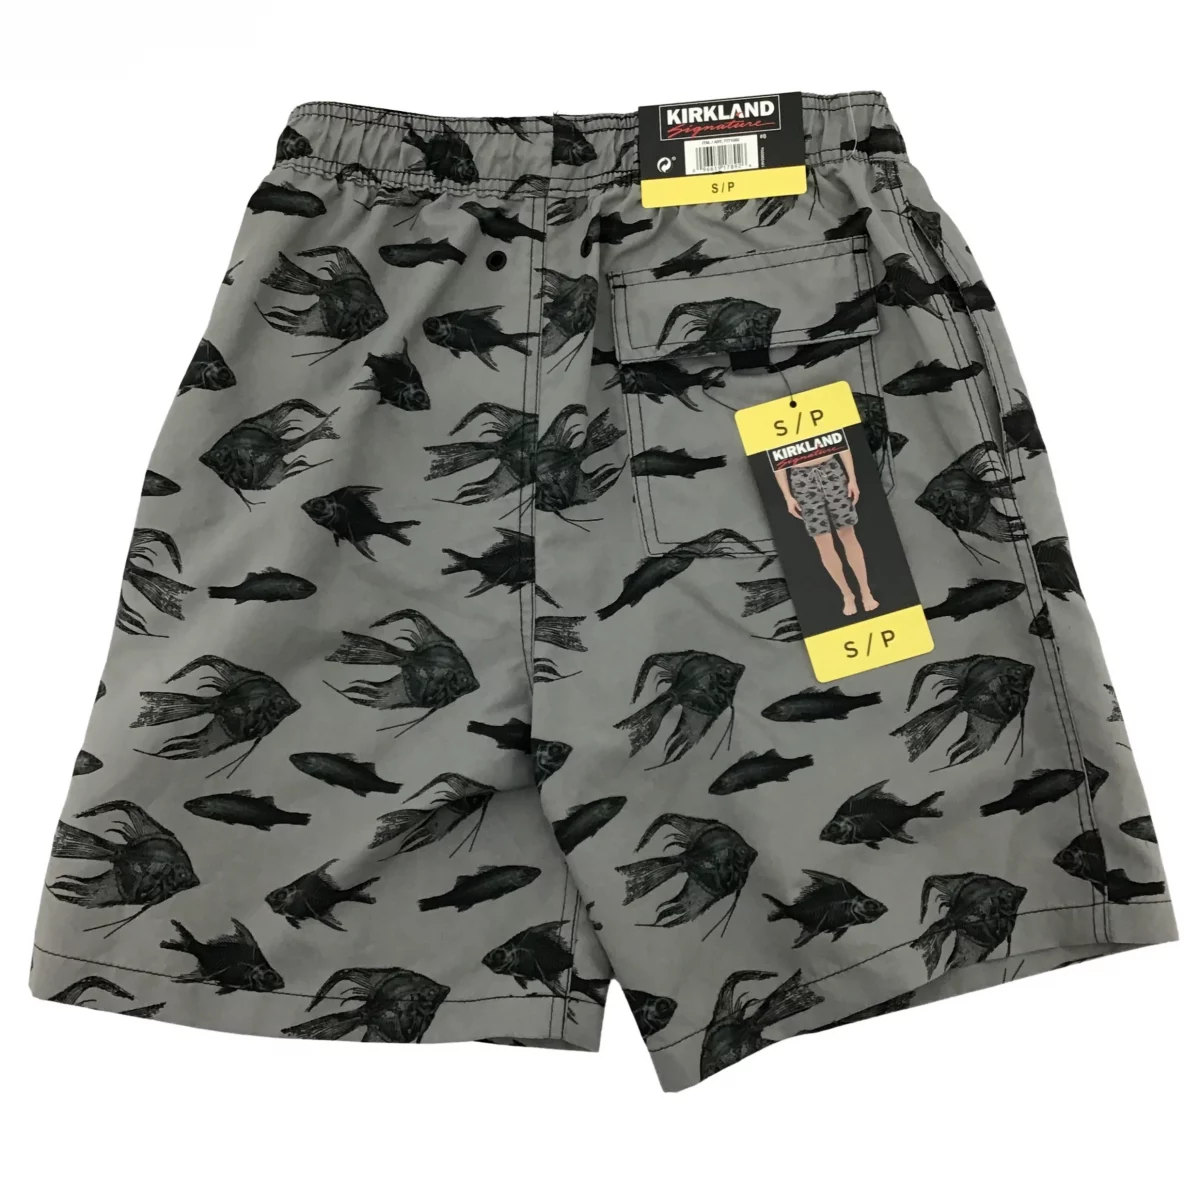 Kirkland Men's Swim Shorts / Grey and Black / Fish Bones / Various Sizes